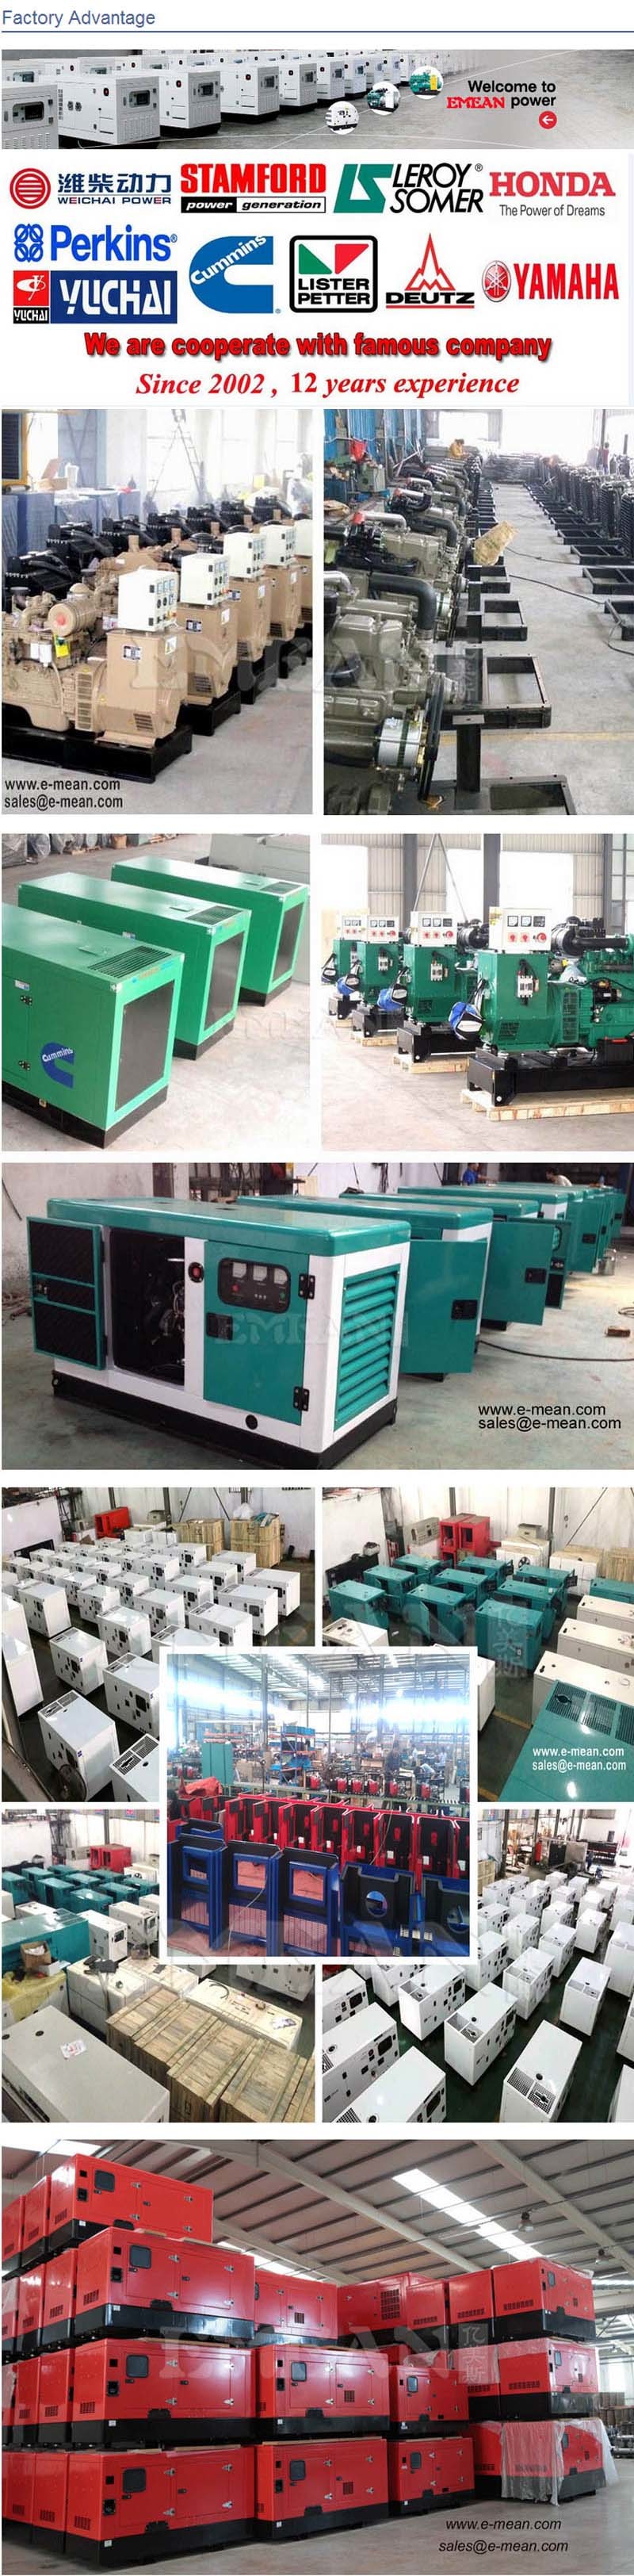 Industrial Diesel Generator AC Brushless Alternator 50kw Alternator Price